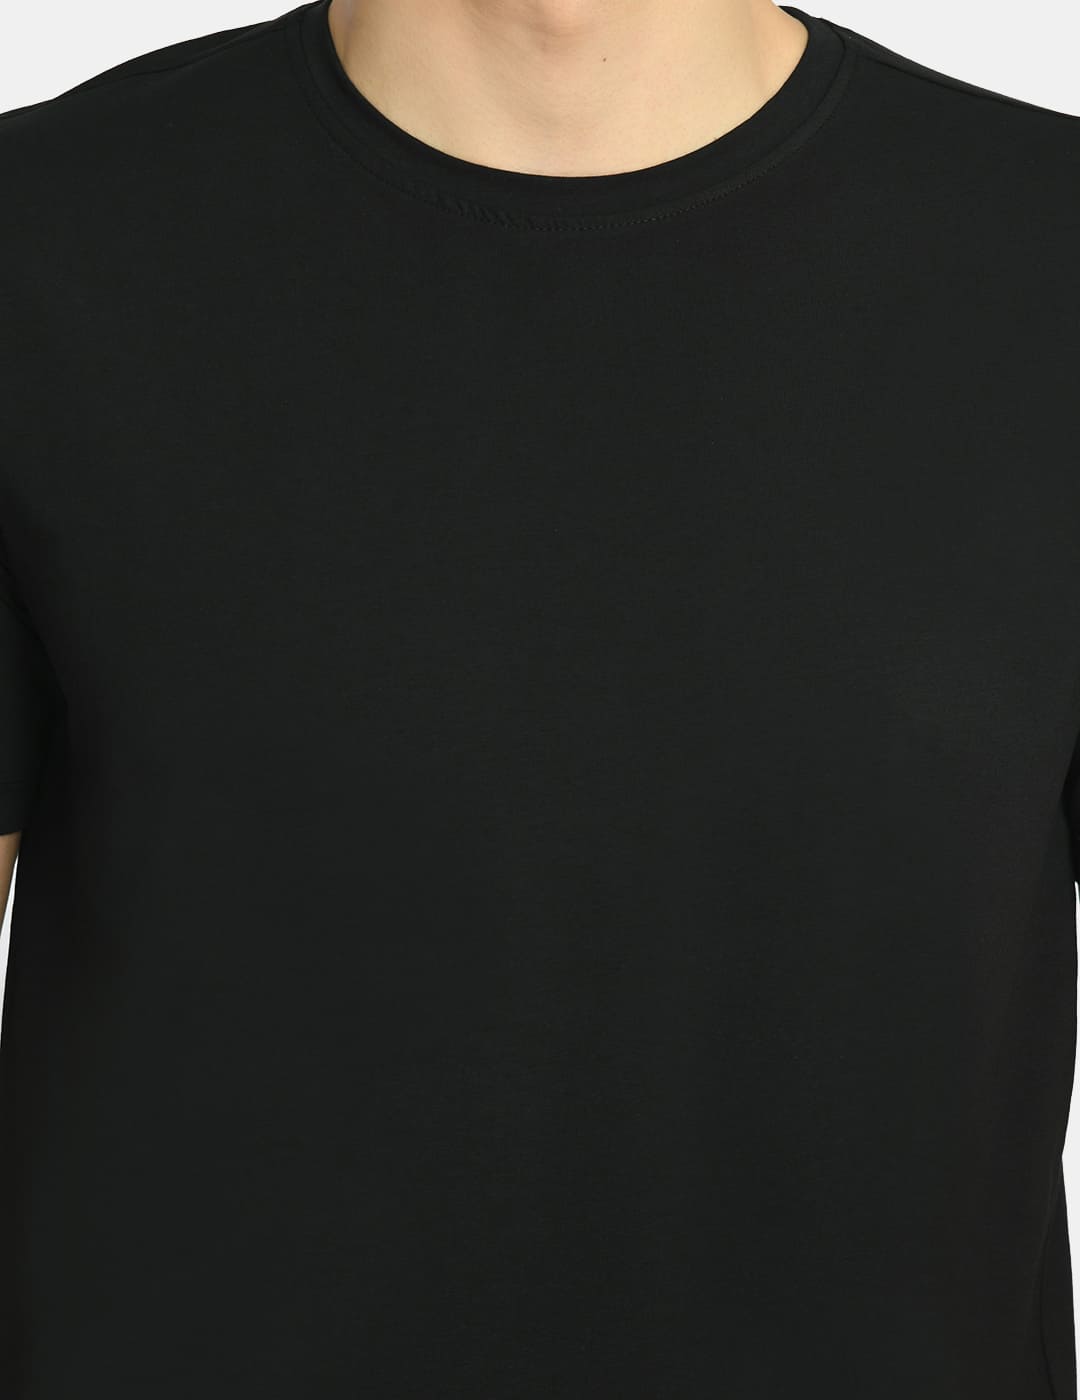 Men's Casual Ink Black Crew Neck T-Shirt